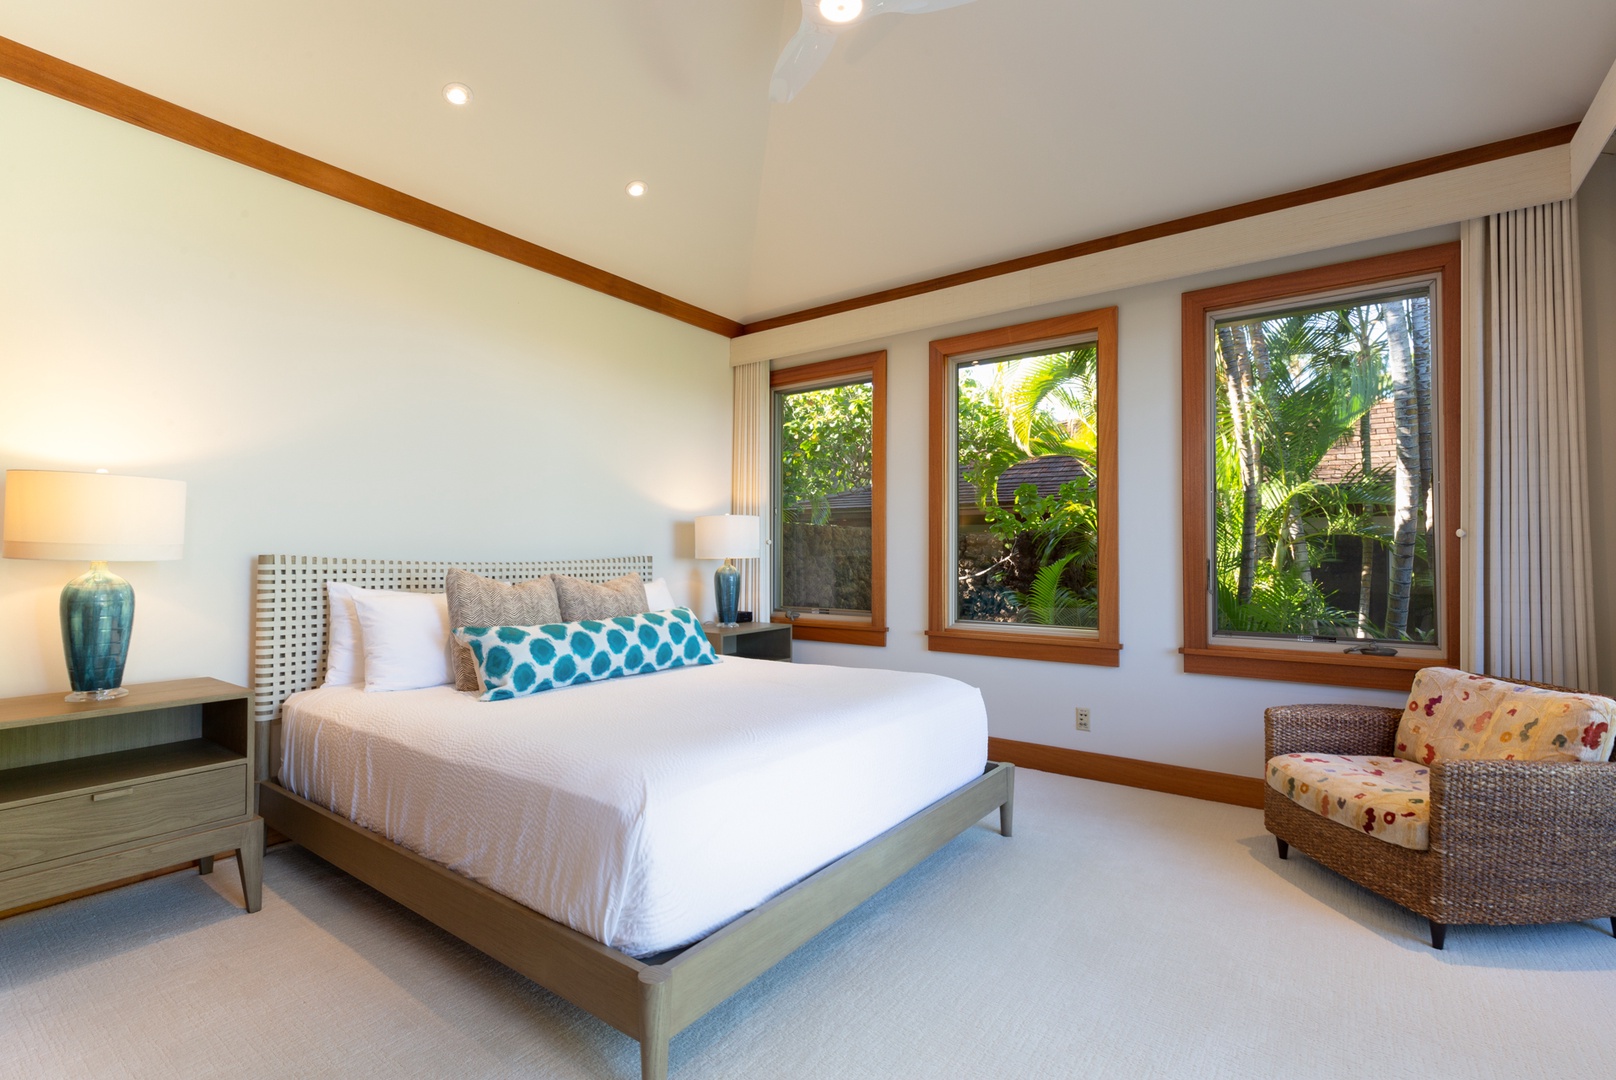 Kailua Kona Vacation Rentals, 4BD Hainoa Estate (102) at Four Seasons Resort at Hualalai - Reverse view with the Ohana bedroom beyond